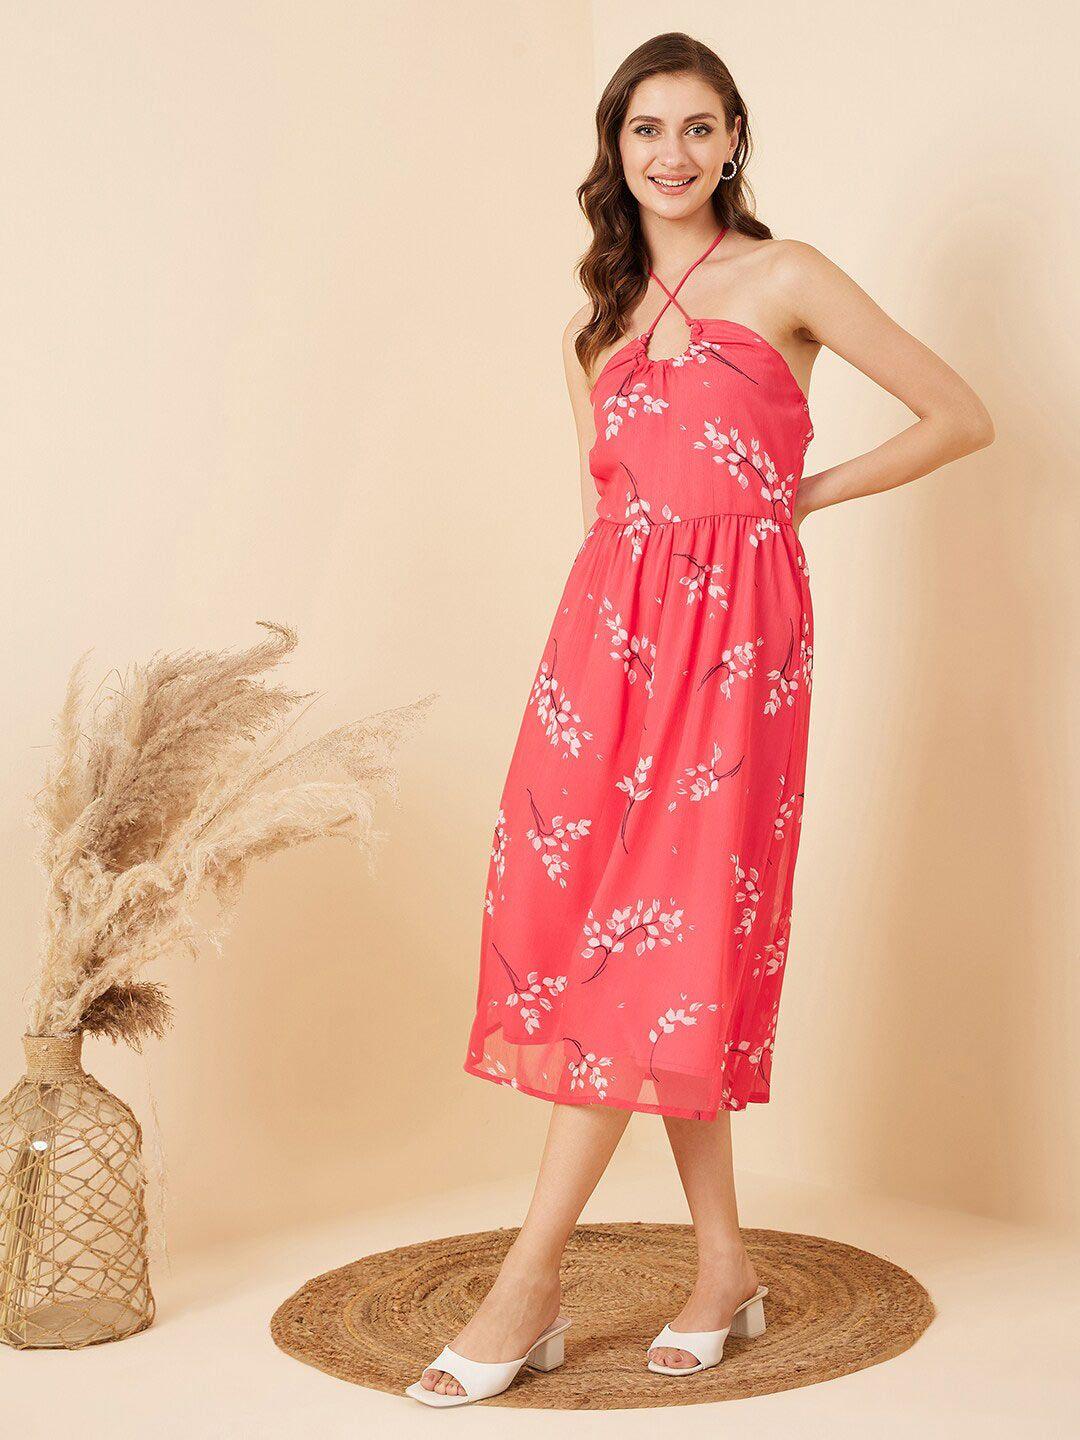 rare-pink-&-white-floral-printed-halter-neck-fit-&-flare-midi-dress